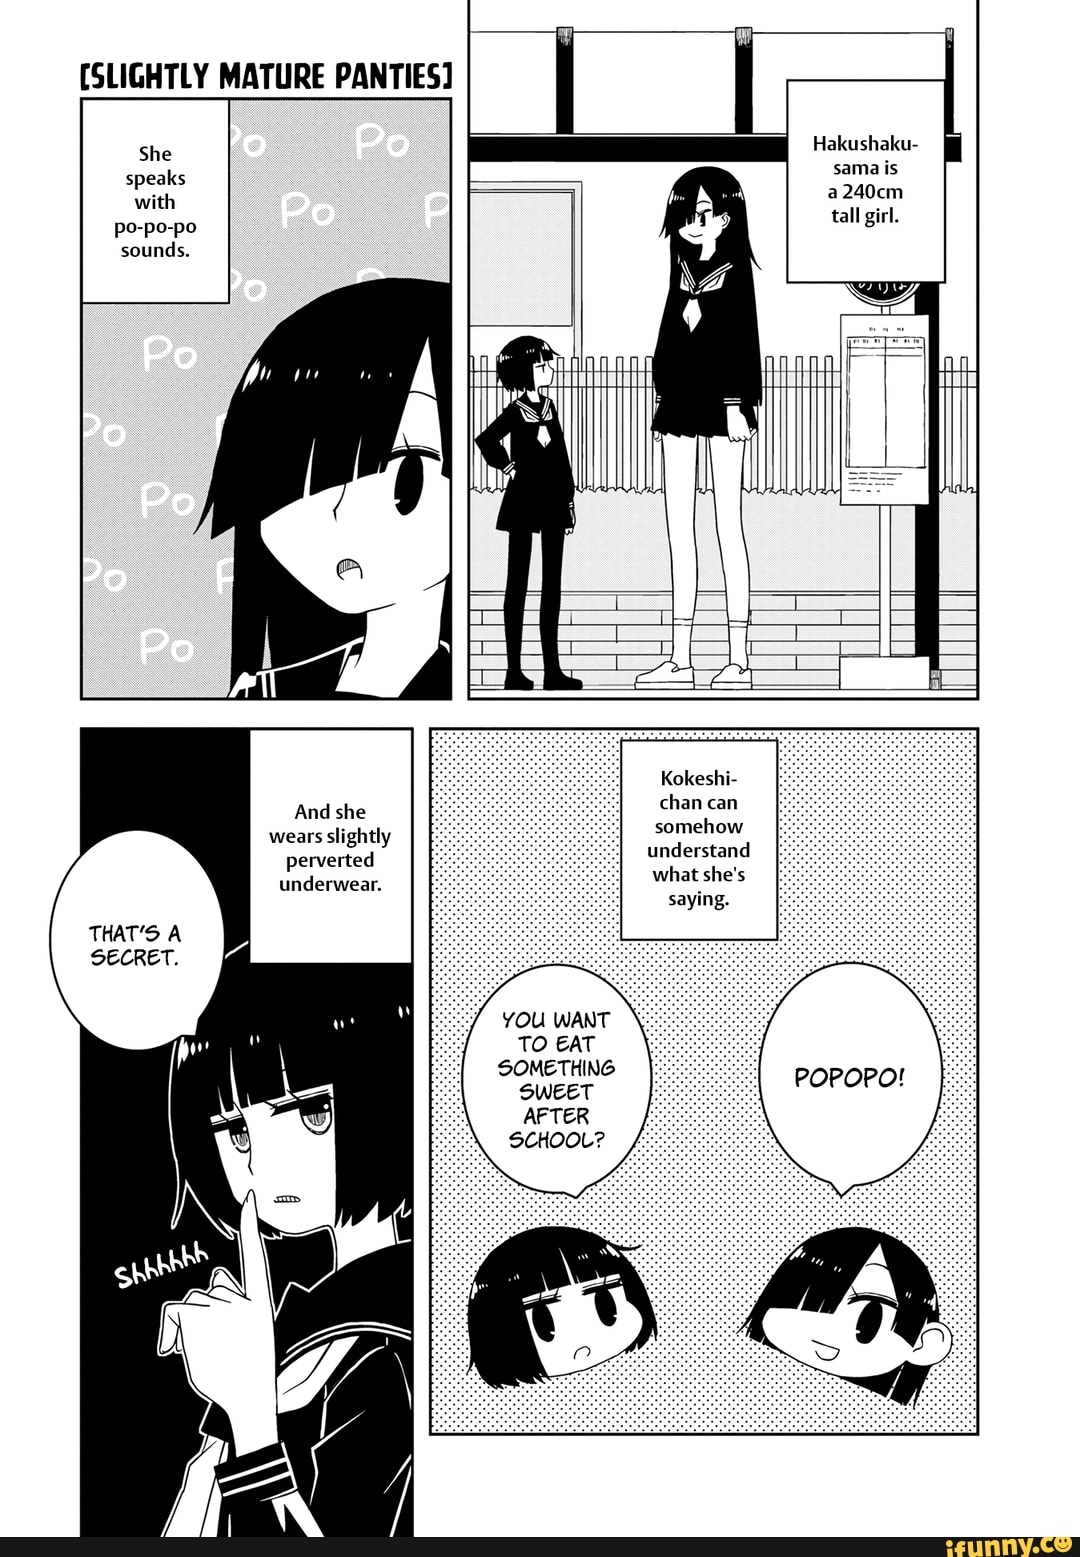 SLIGHTLY MATURE PANTIES] She speaks with po-po-po sounds. Hakushaku- sama  is a240cm tall girl.